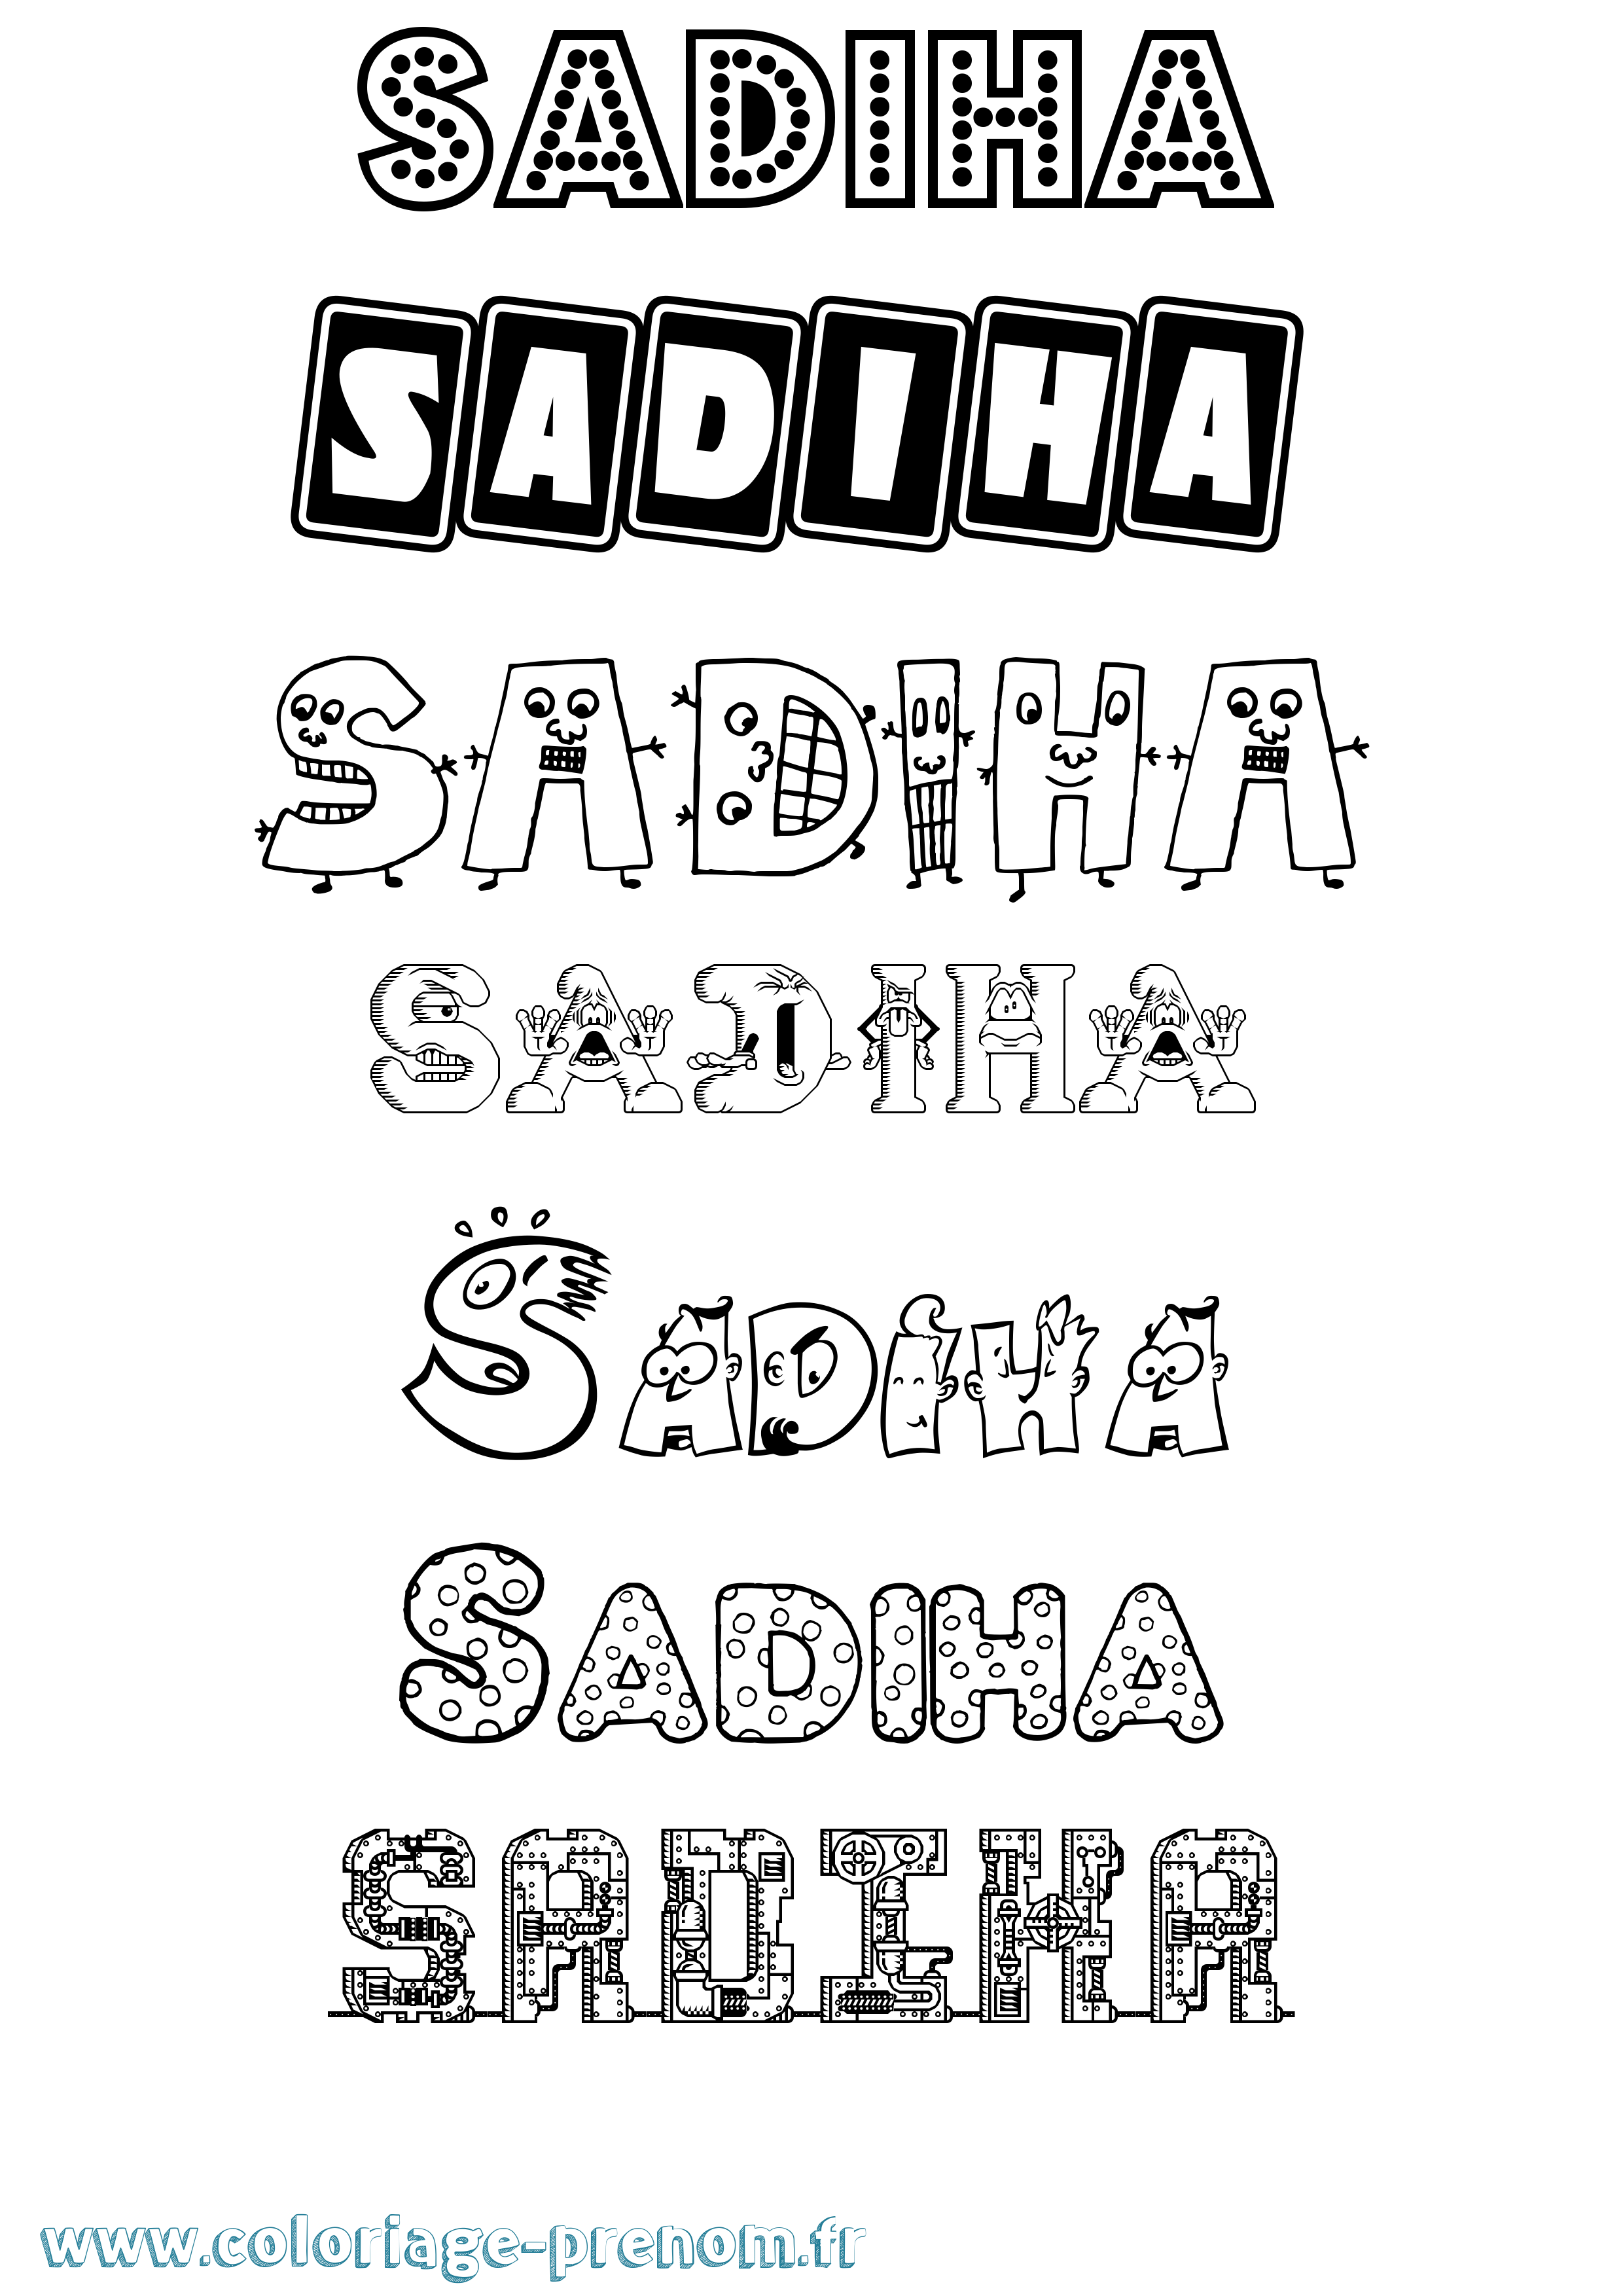 Coloriage prénom Sadiha Fun